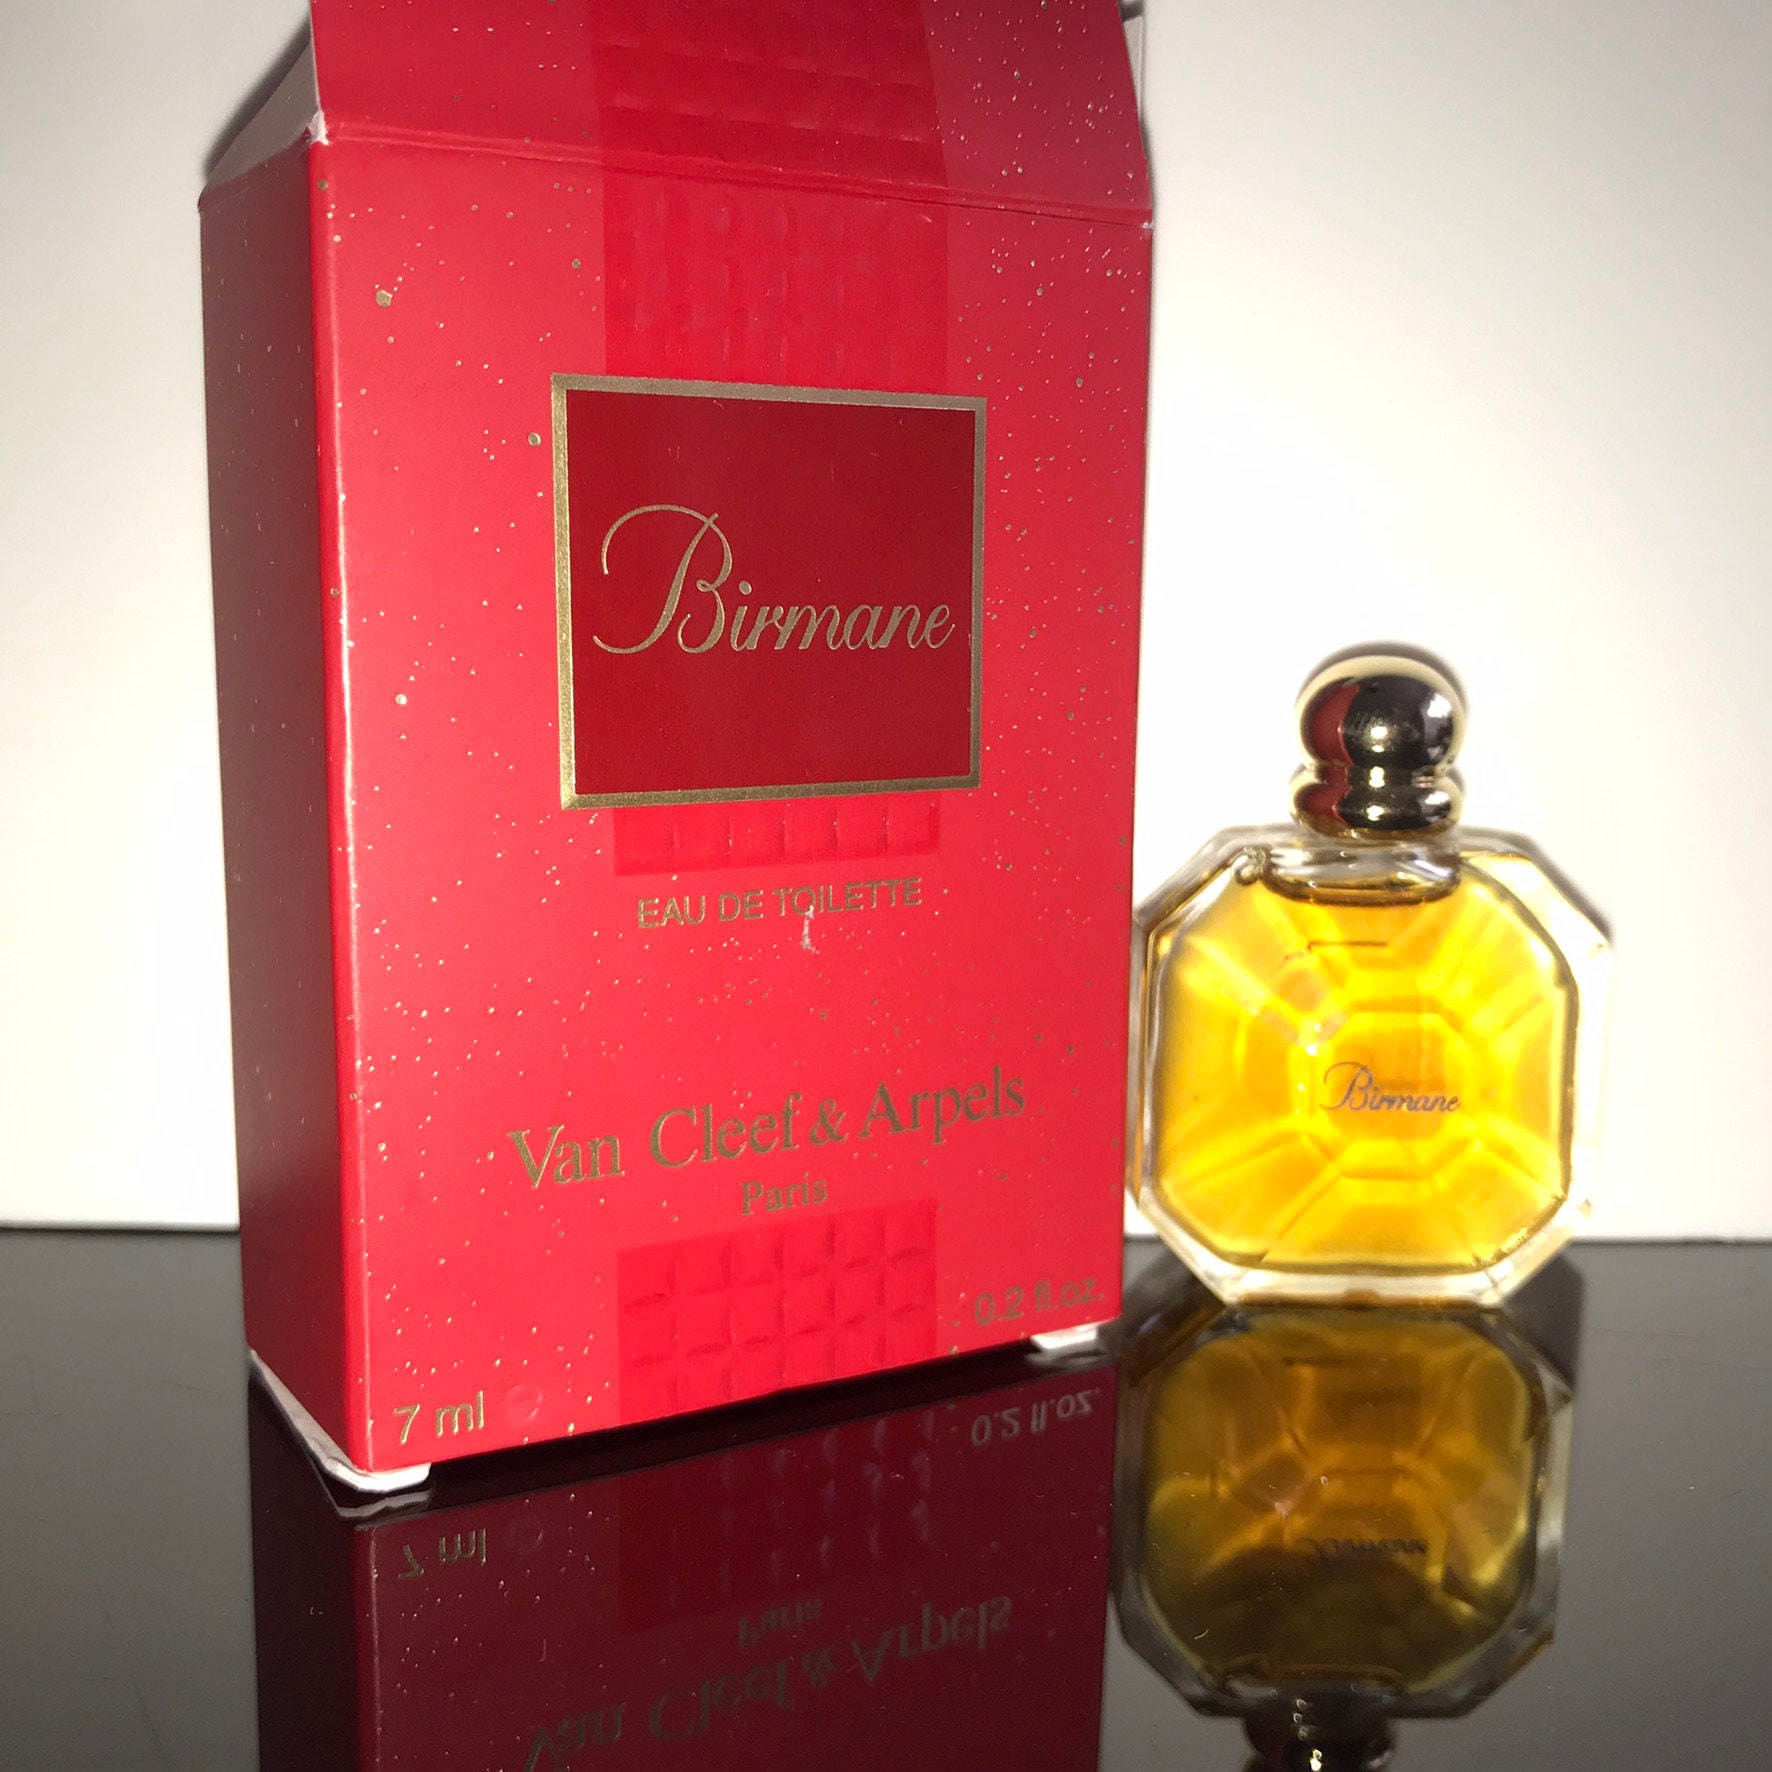 Van Cleef & Arpels - Birmane Eau De Toilette 7 Ml Vintage Rar Box von Etsy - miniperfumes